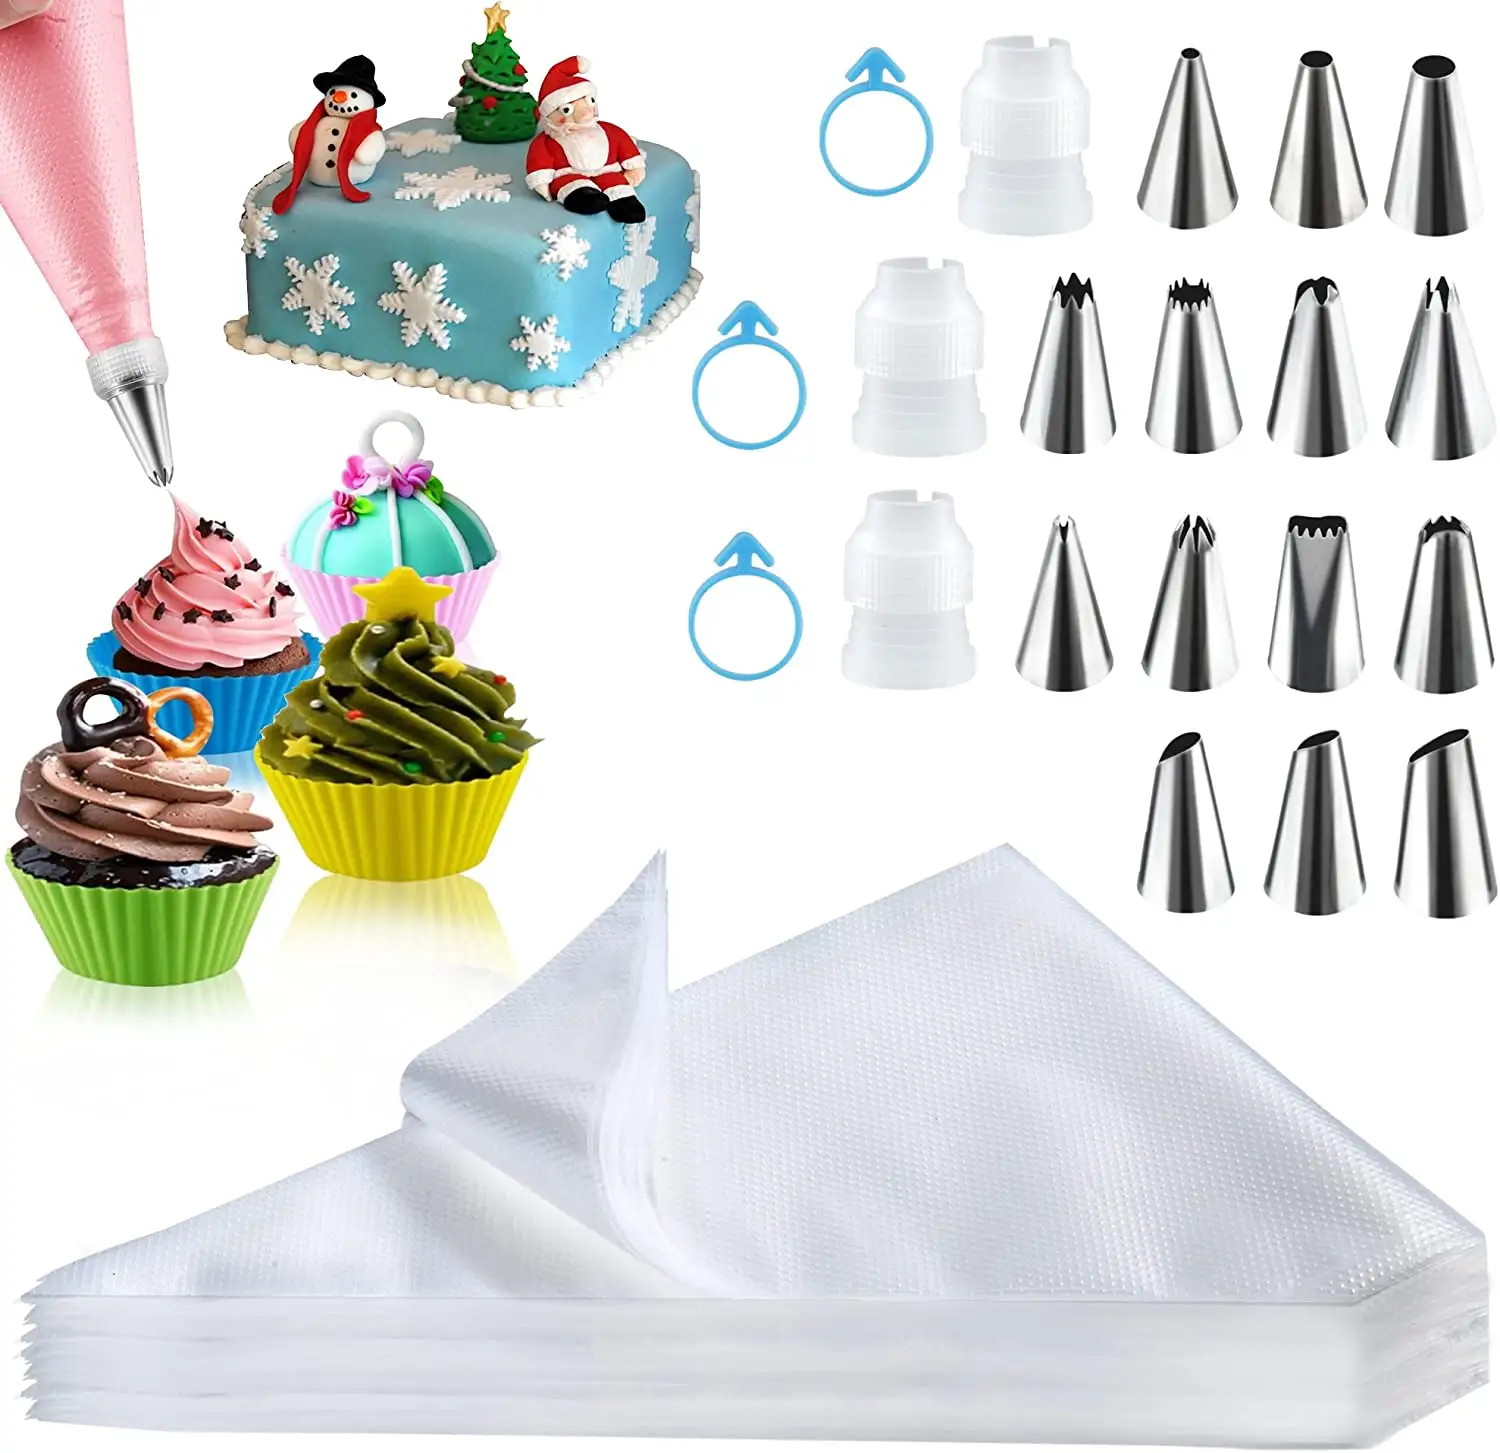 Sacos de confeitaria personalizados, sacos de confeiteiro personalizados de s m l, ferramenta de decoração de bolo, cobertor, saco de confeiteiro de cozinha descartável